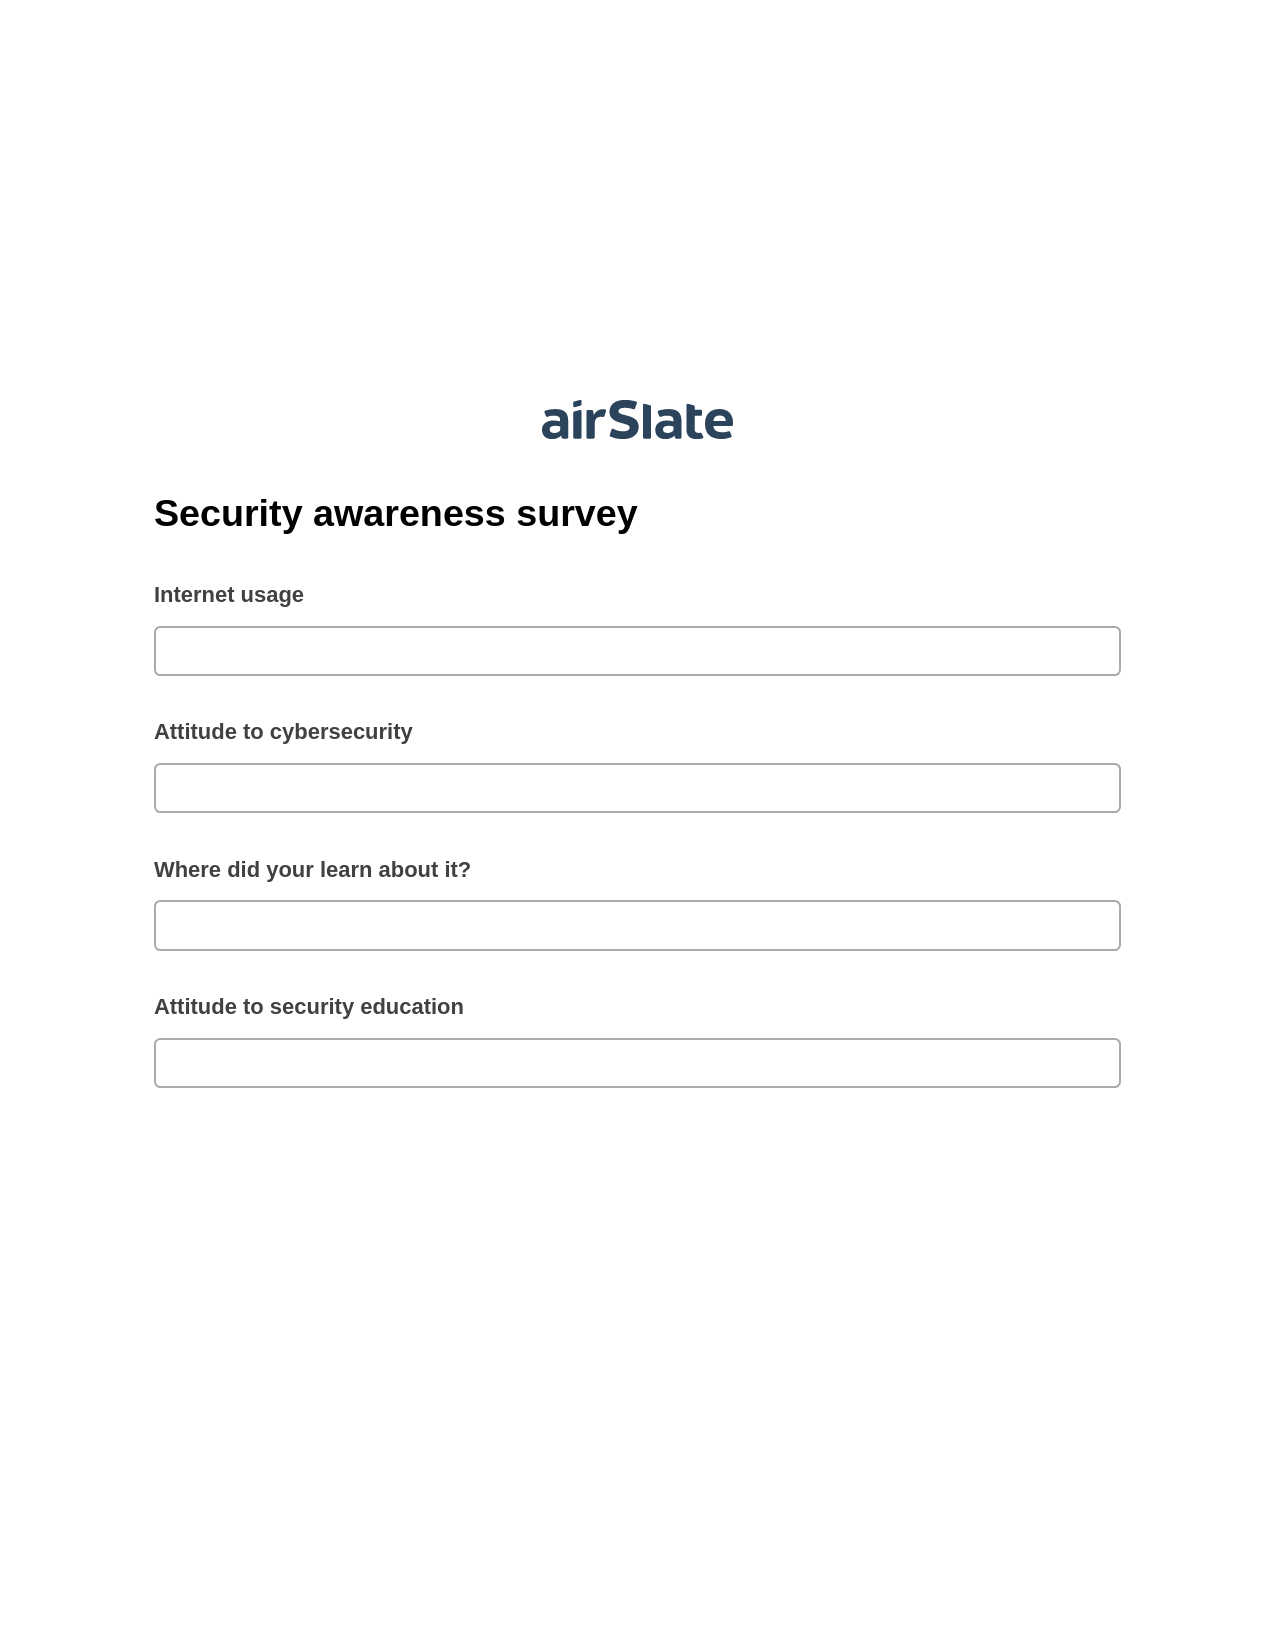 Security awareness survey Pre-fill from MySQL Bot, Invoke Salesforce Process Bot, Dropbox Bot